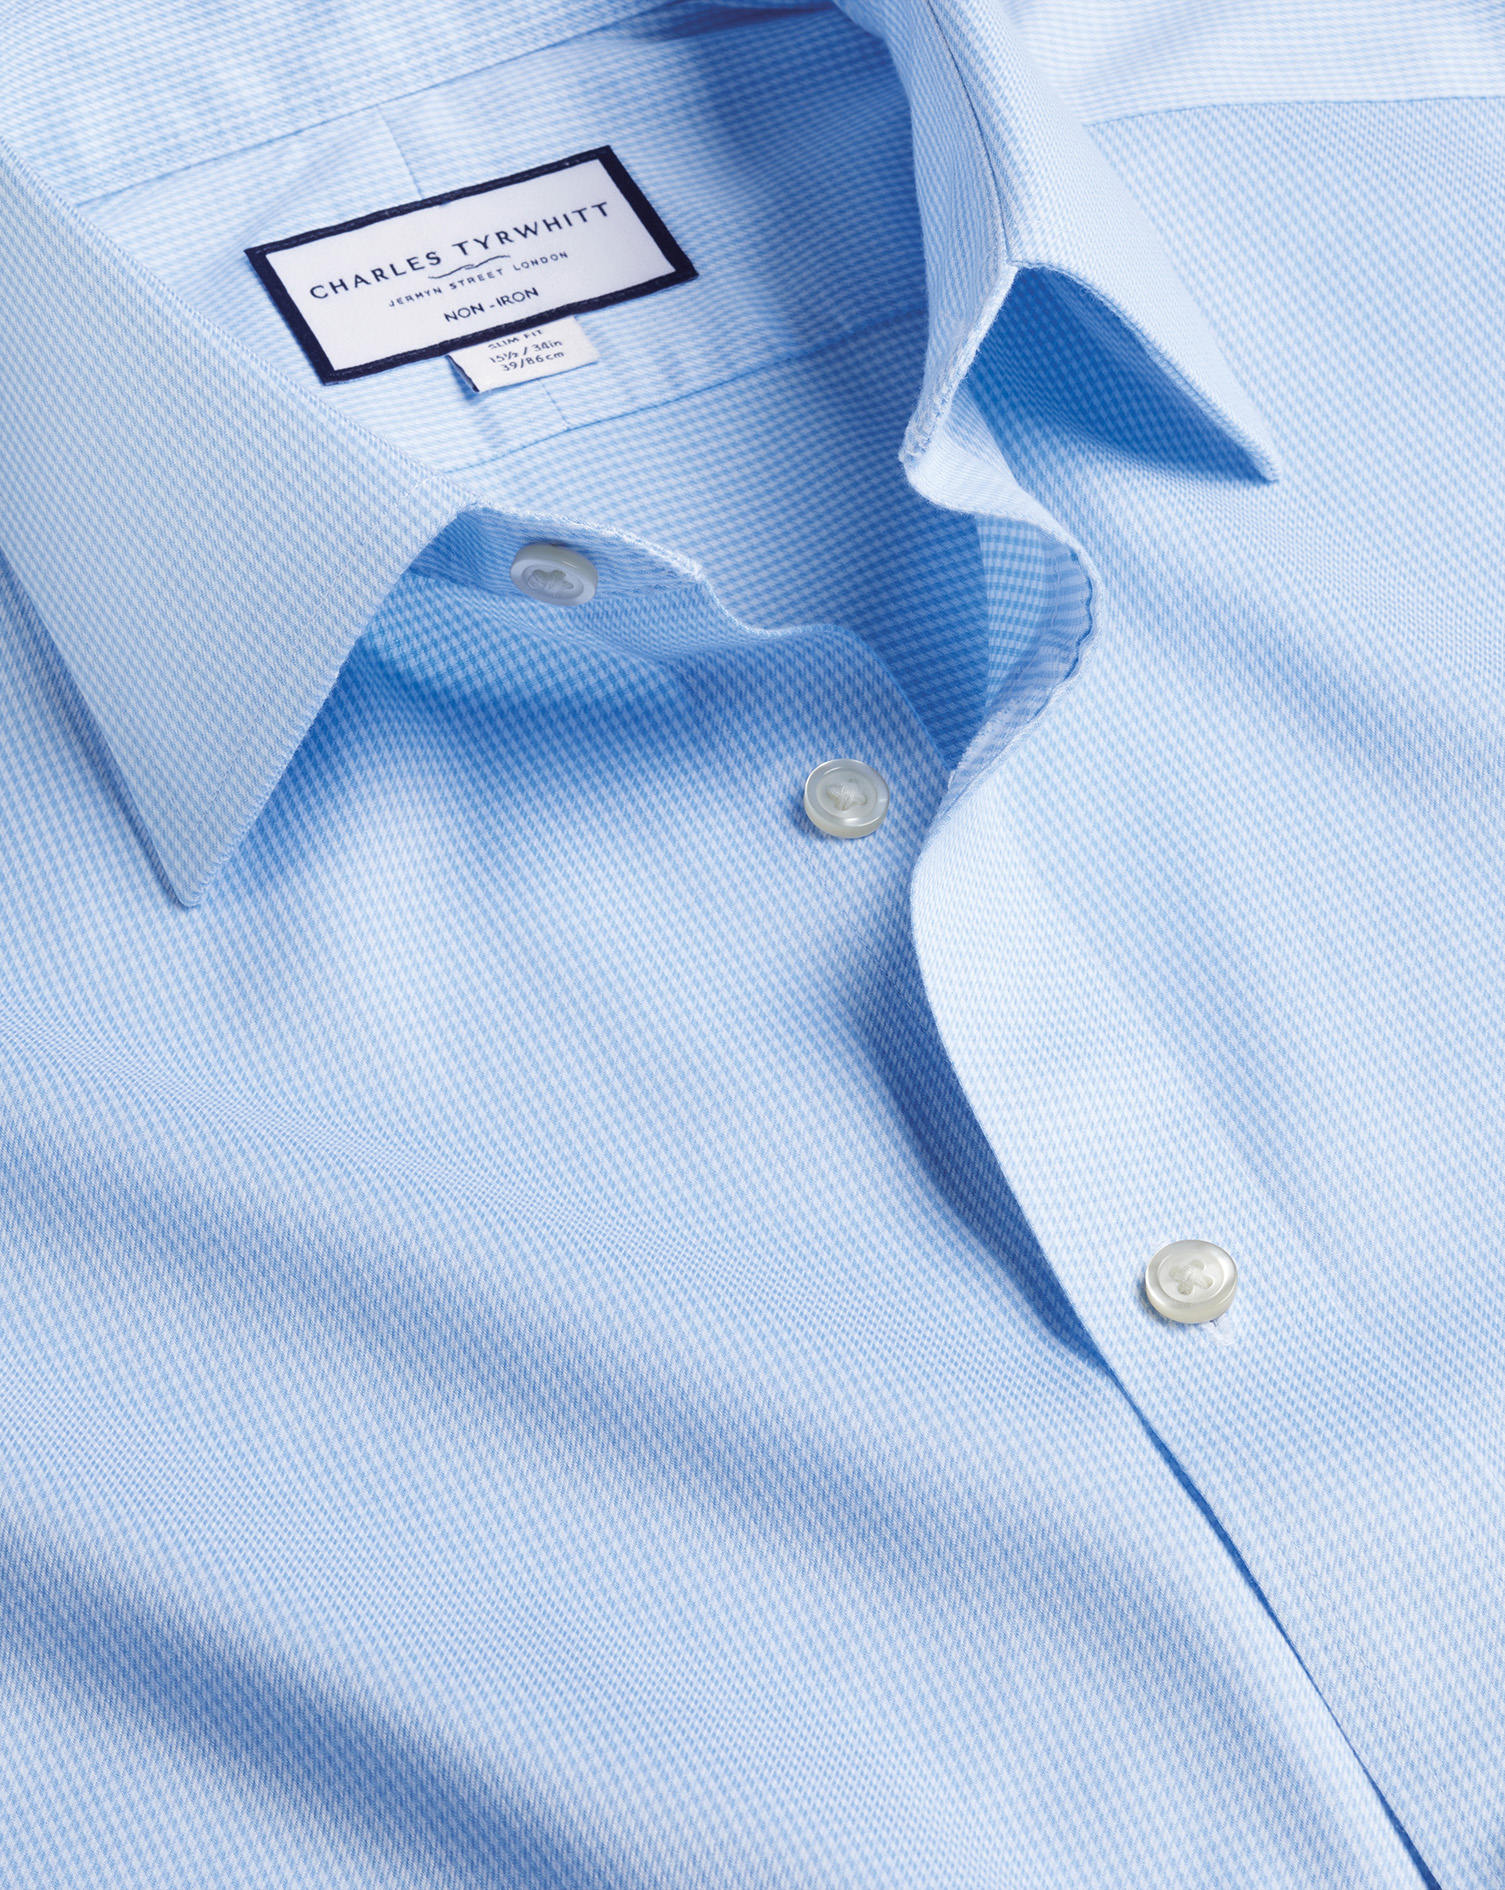 Men's Charles Tyrwhitt Non-Iron Puppytooth Dress Shirt - Sky Blue Single Cuff Size Small Cotton
